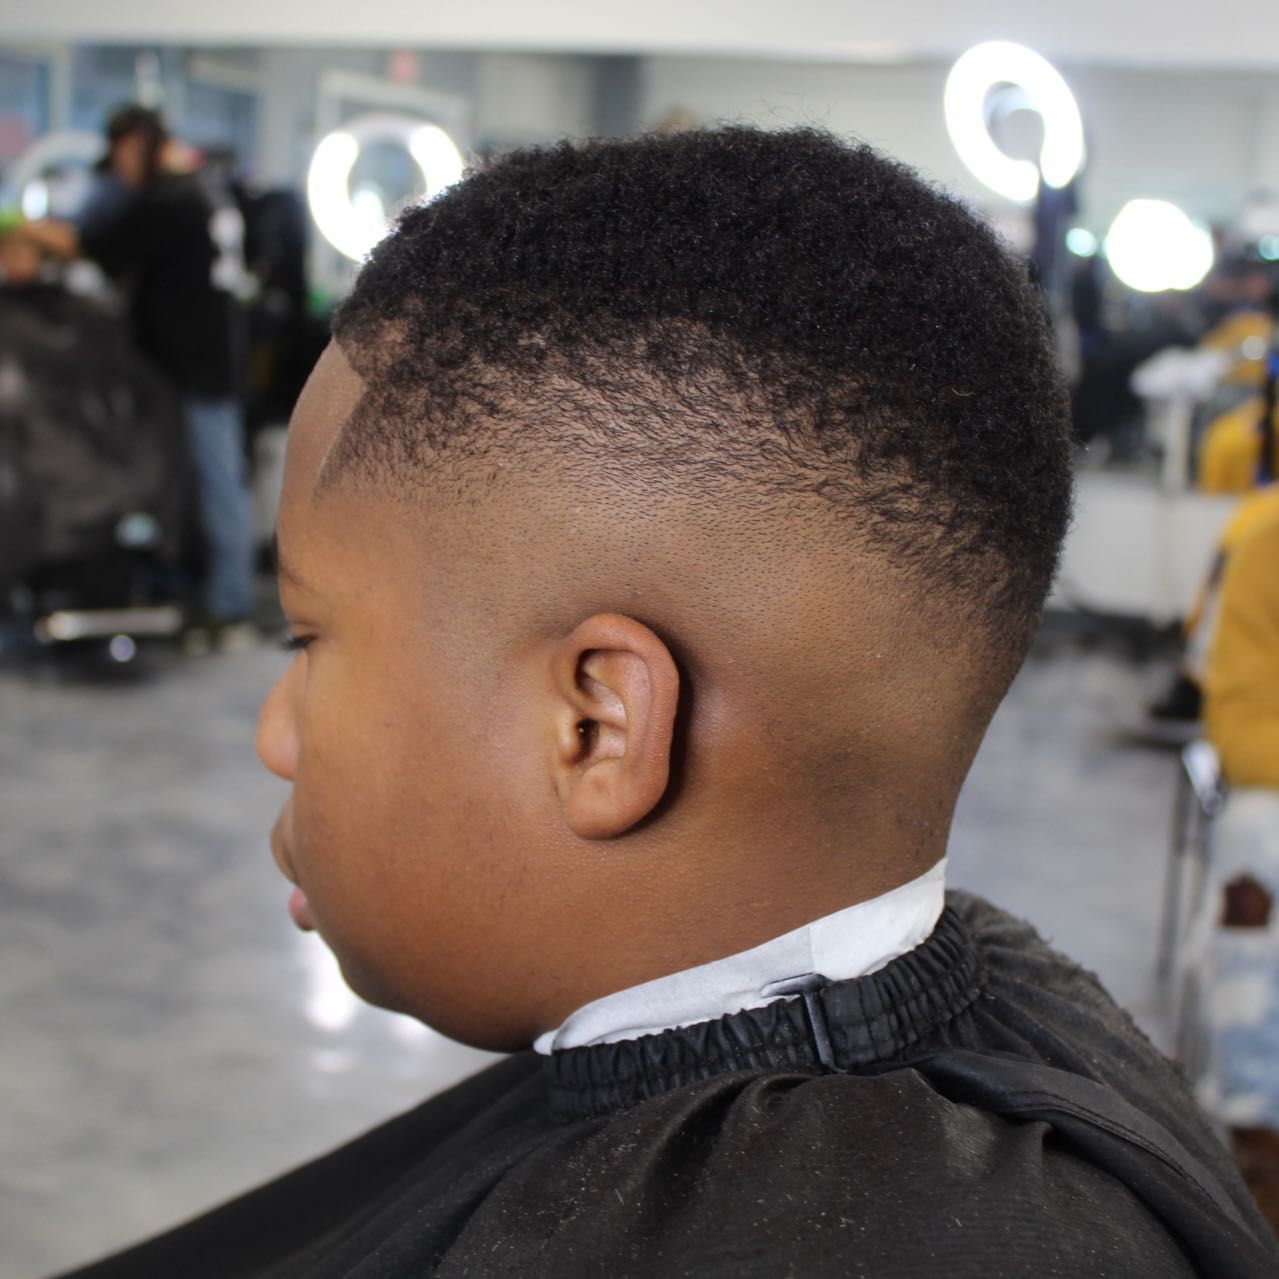 Kiddo’s Haircut Under 11 portfolio